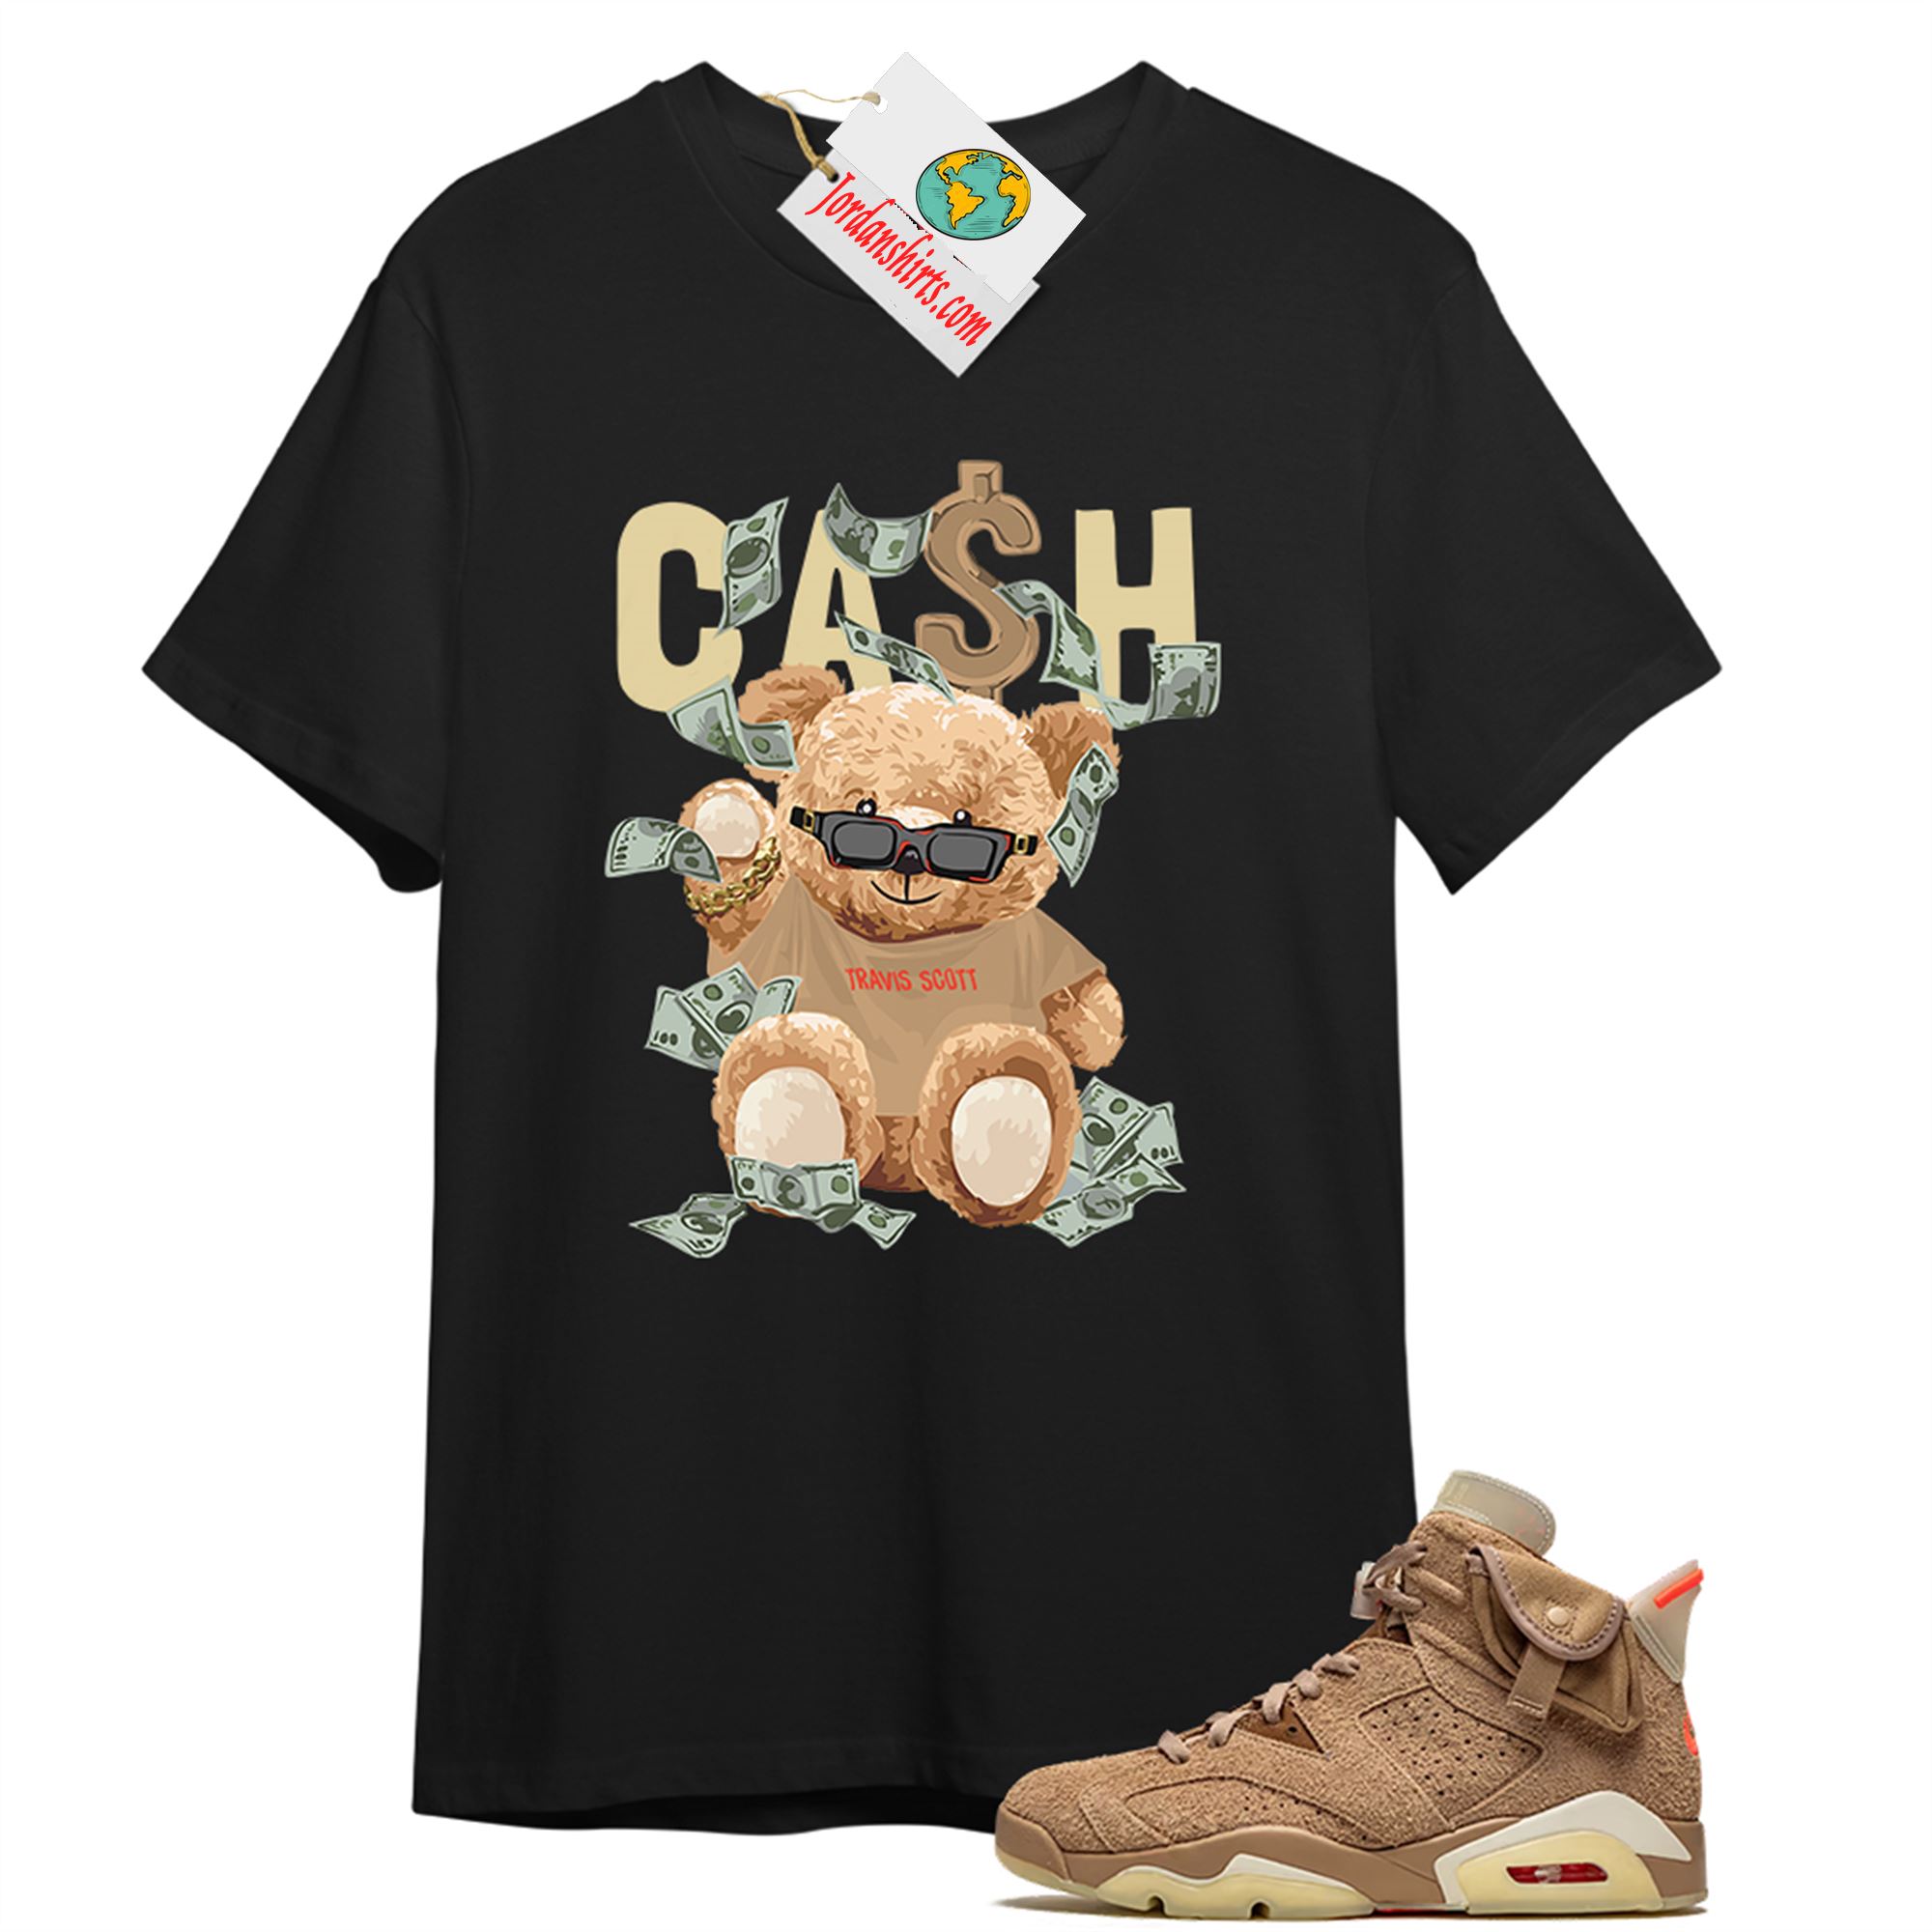 Jordan 6 Shirt, Cash Teddy Bear In Sunglasses Black T-shirt Air Jordan 6 Travis Scott 6s Plus Size Up To 5xl